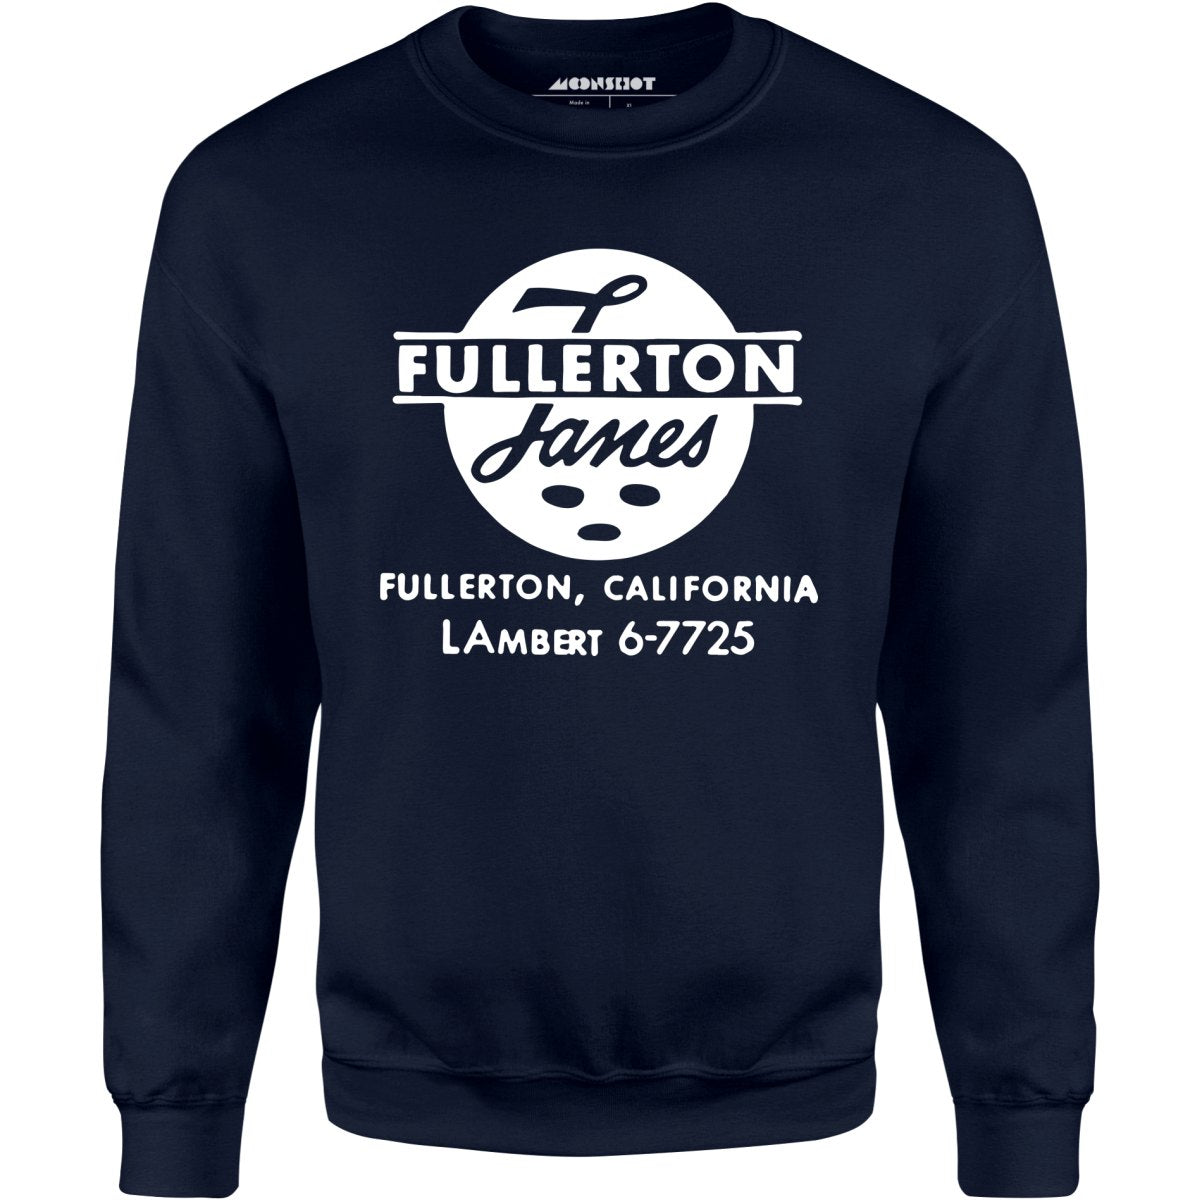 Fullerton Lanes - Fullerton, CA - Vintage Bowling Alley - Unisex Sweatshirt